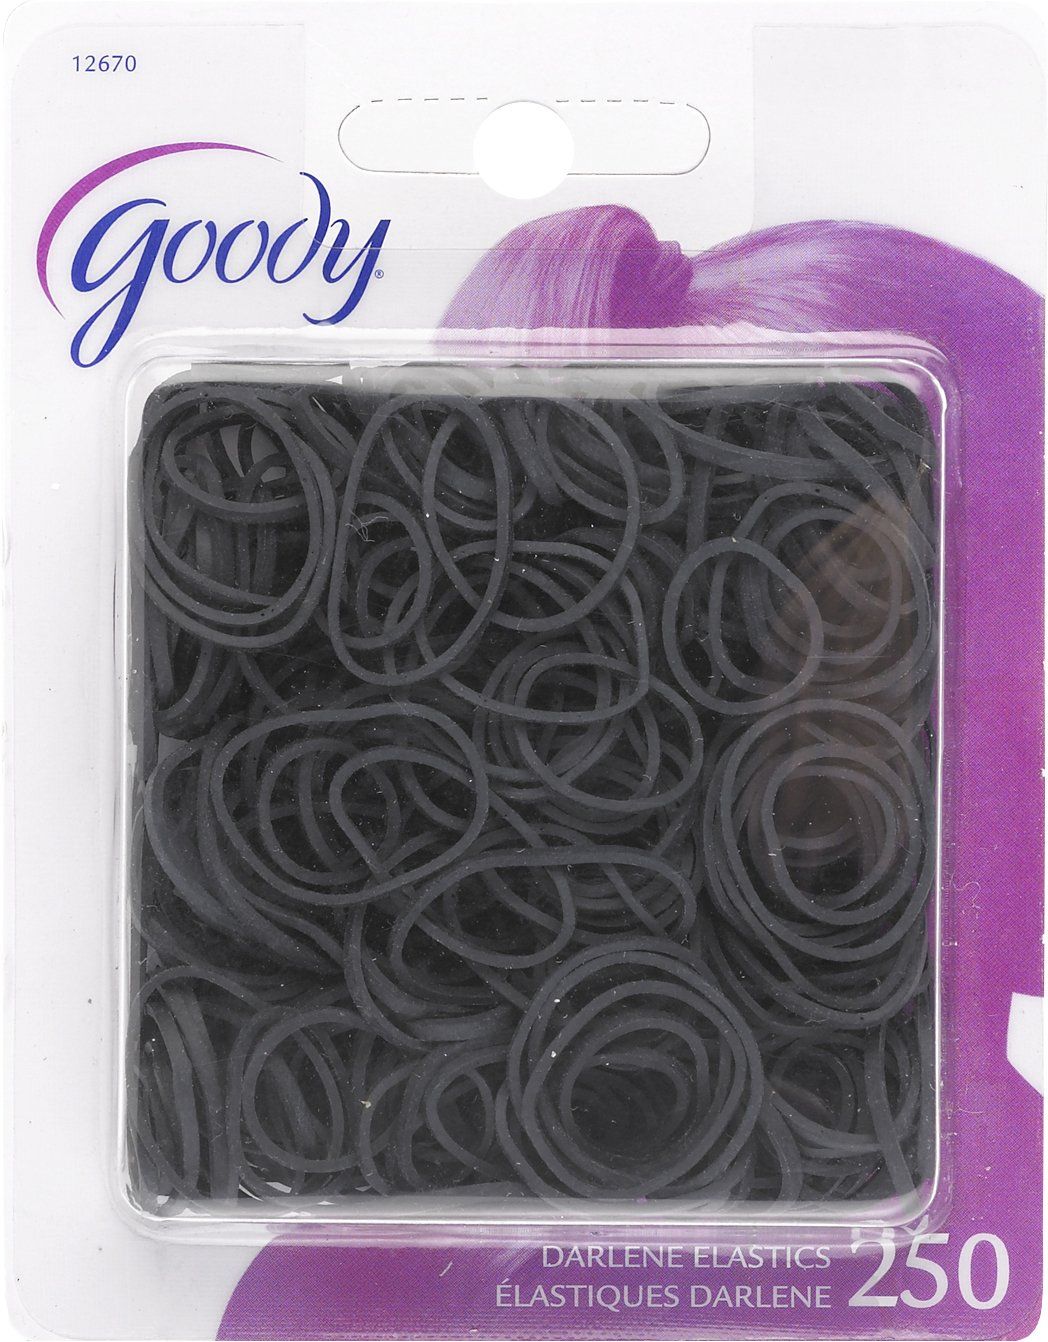 Goody - Classics Rubberband, Black - 250 Count